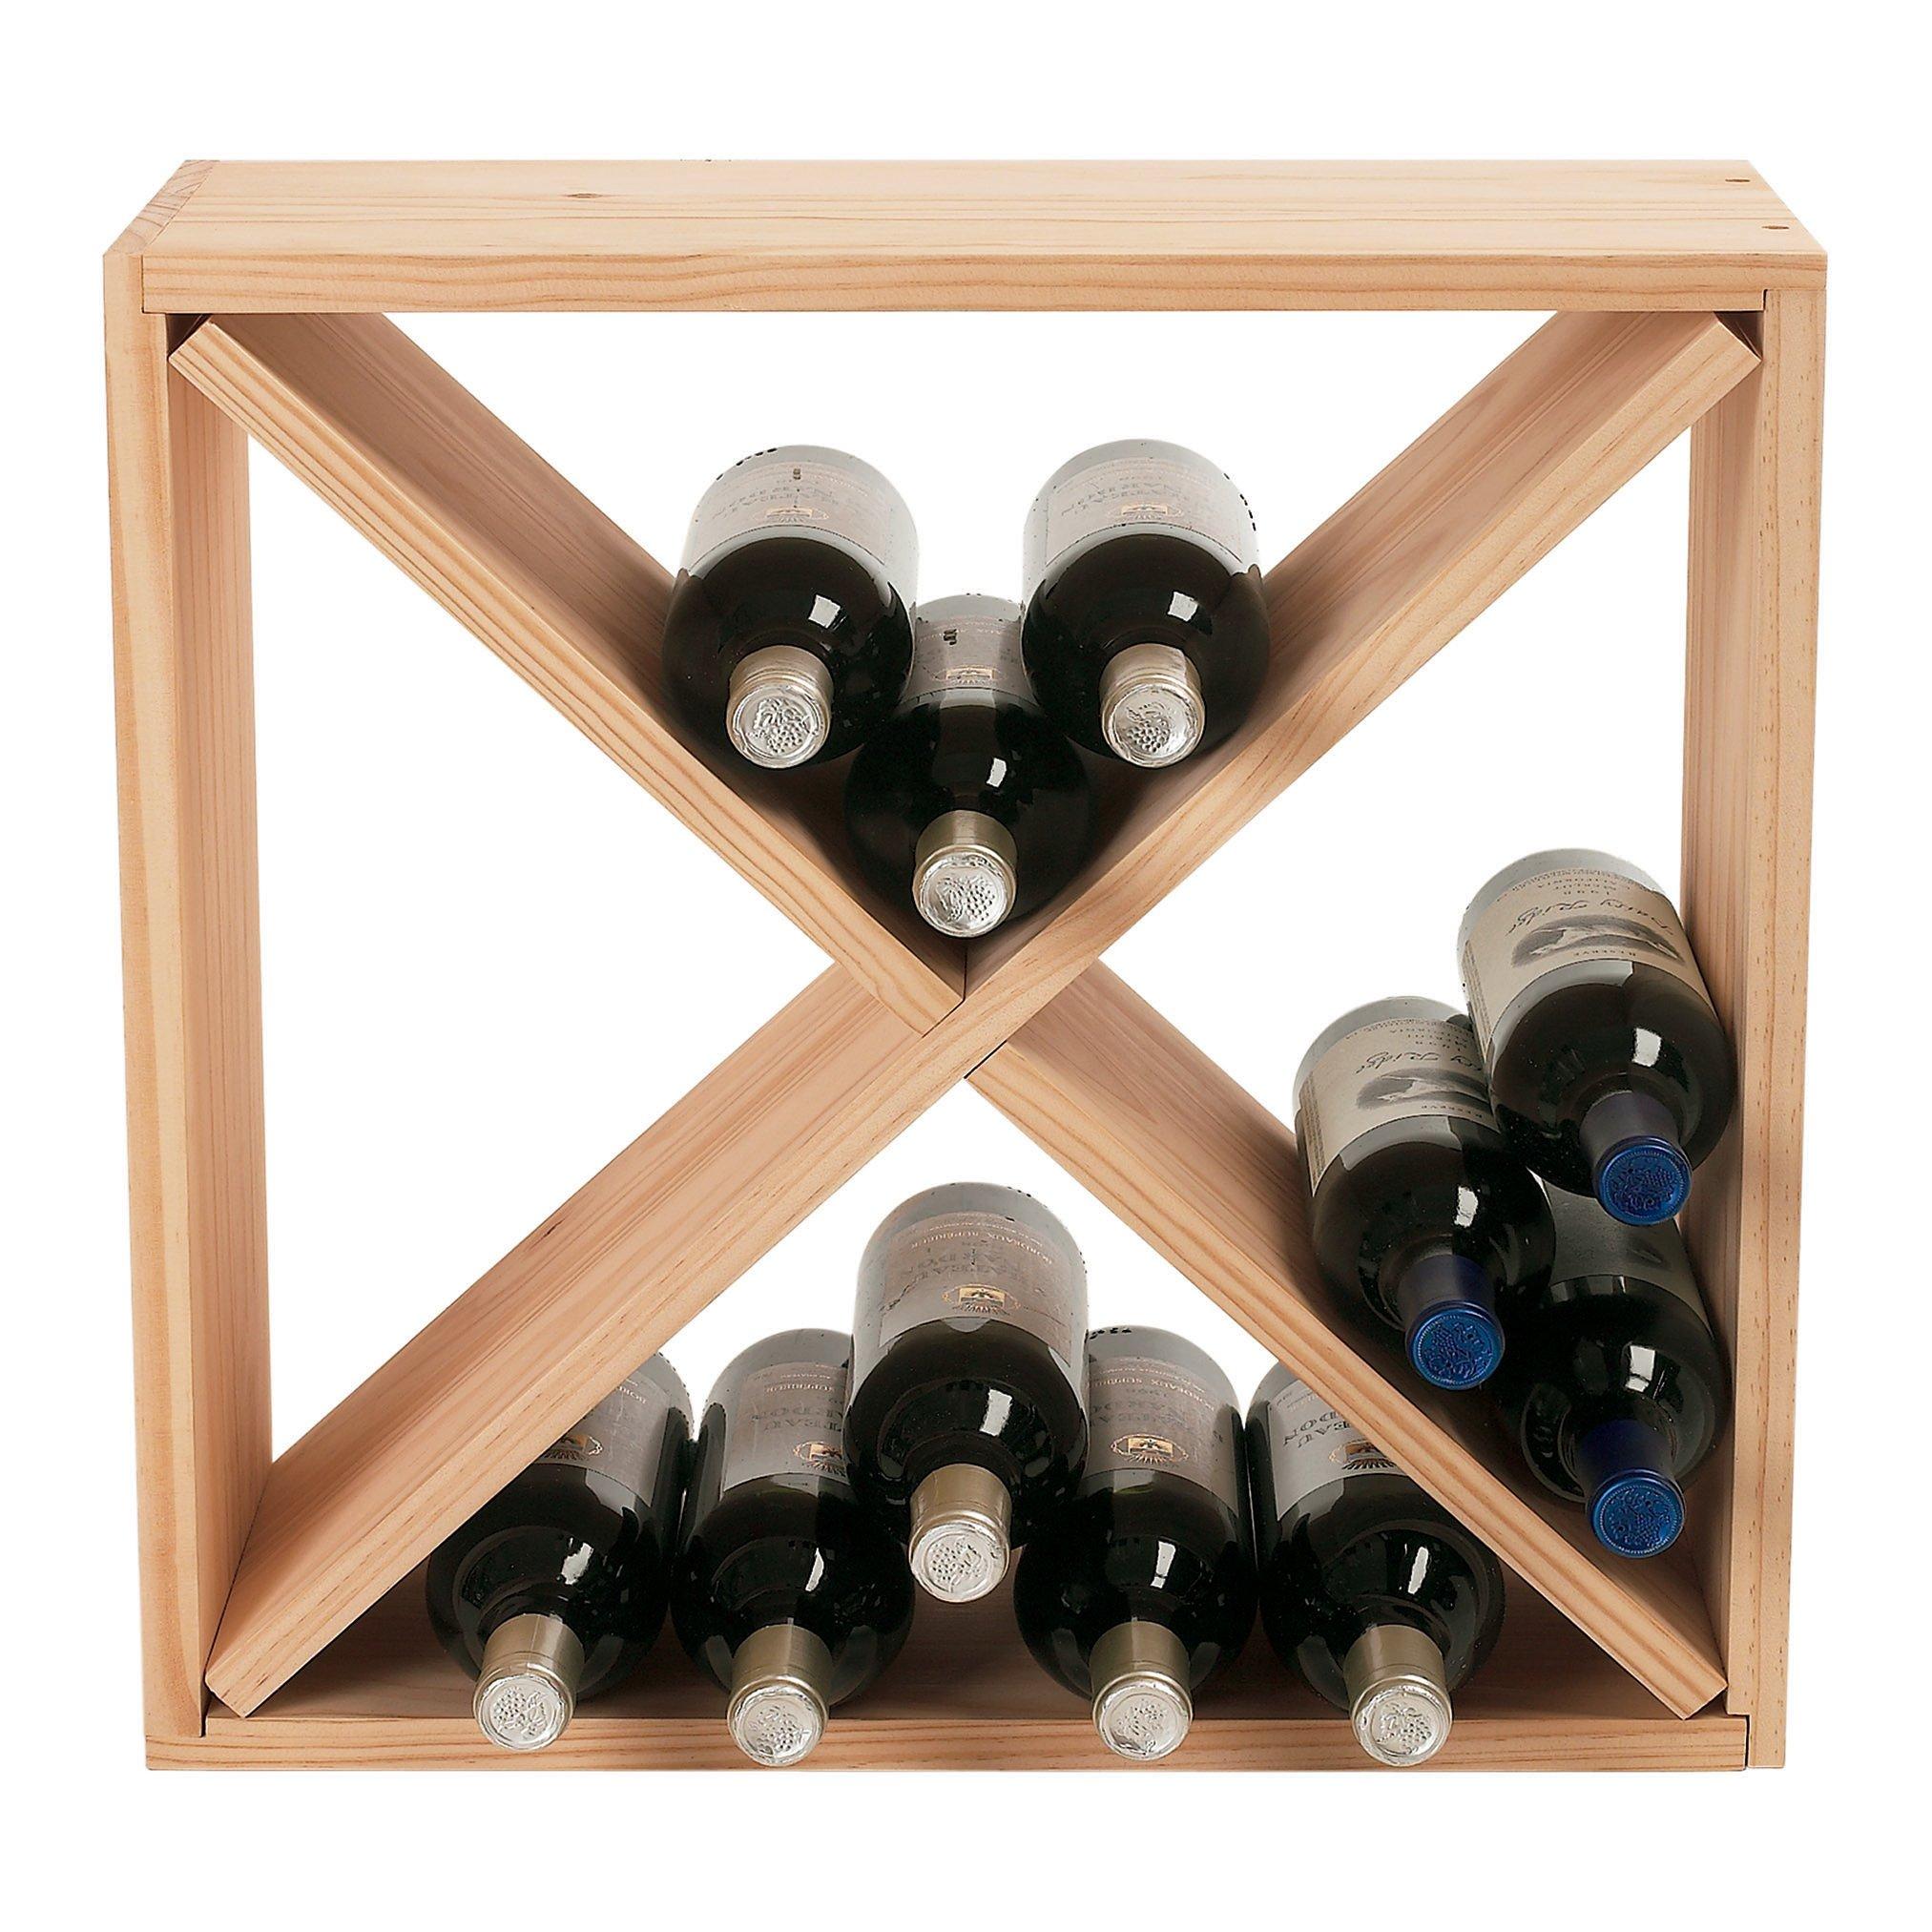 Wine Glass Storage and Racks - Wine Enthusiast